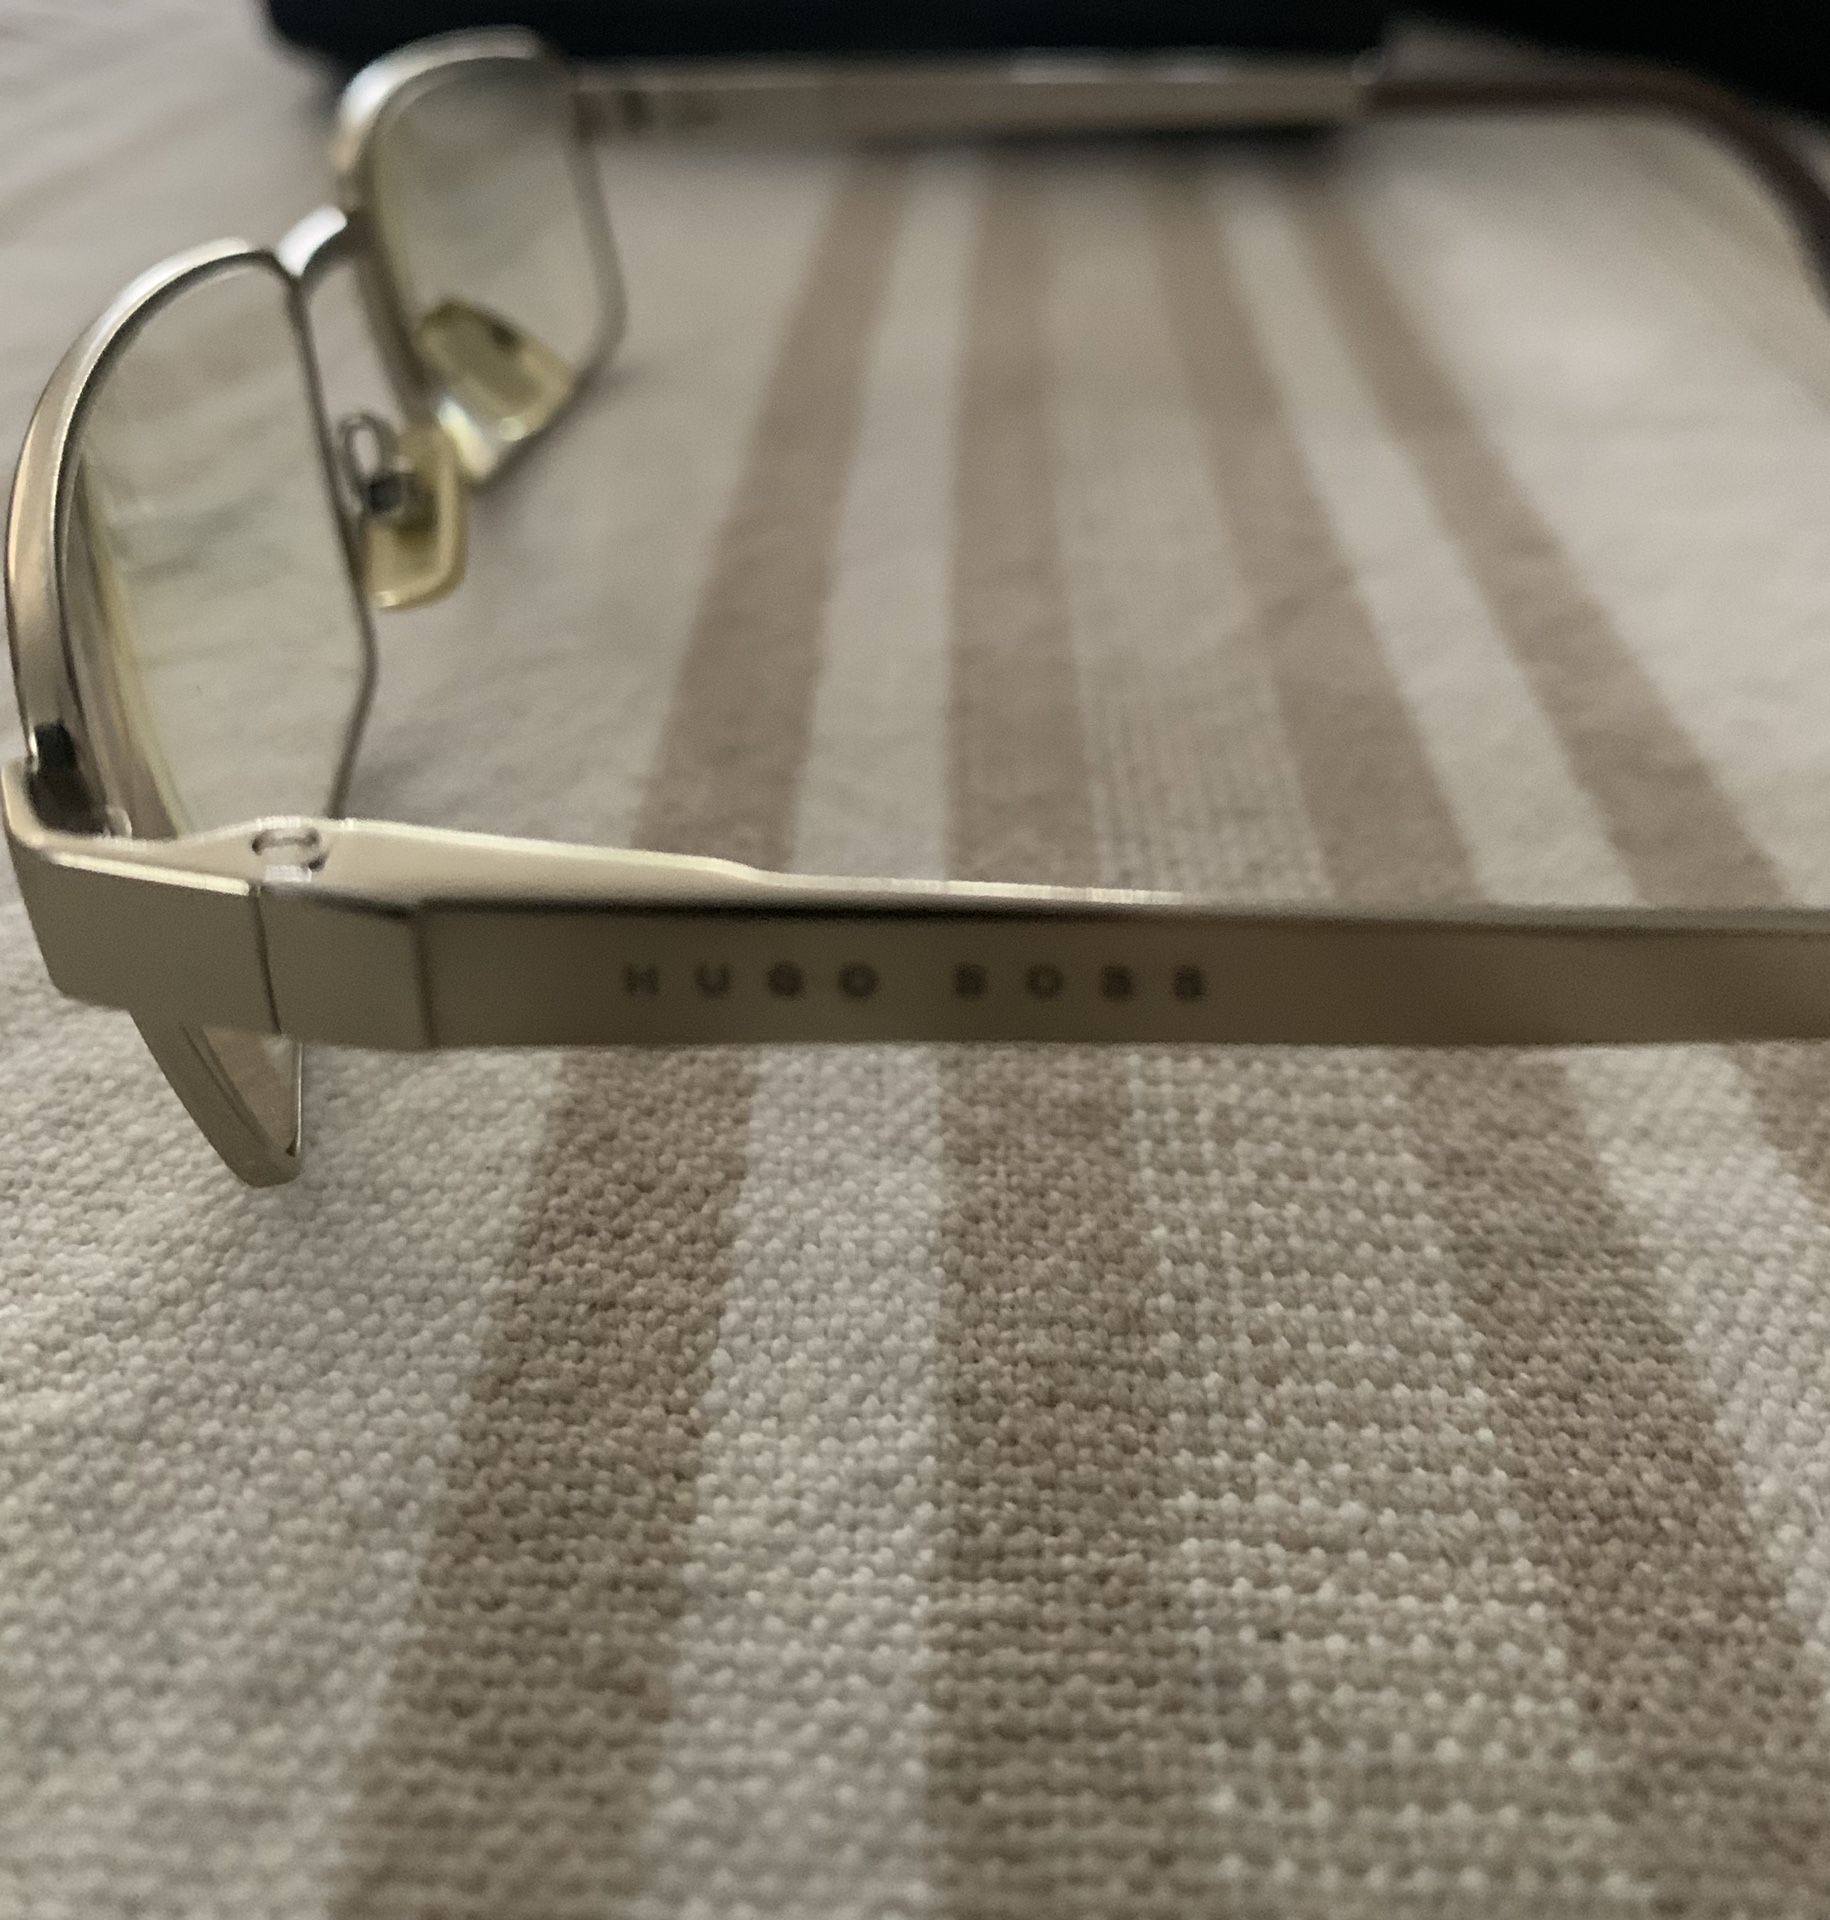 Frame ( Monturas De Lentes ) Eyeglass Prescription 